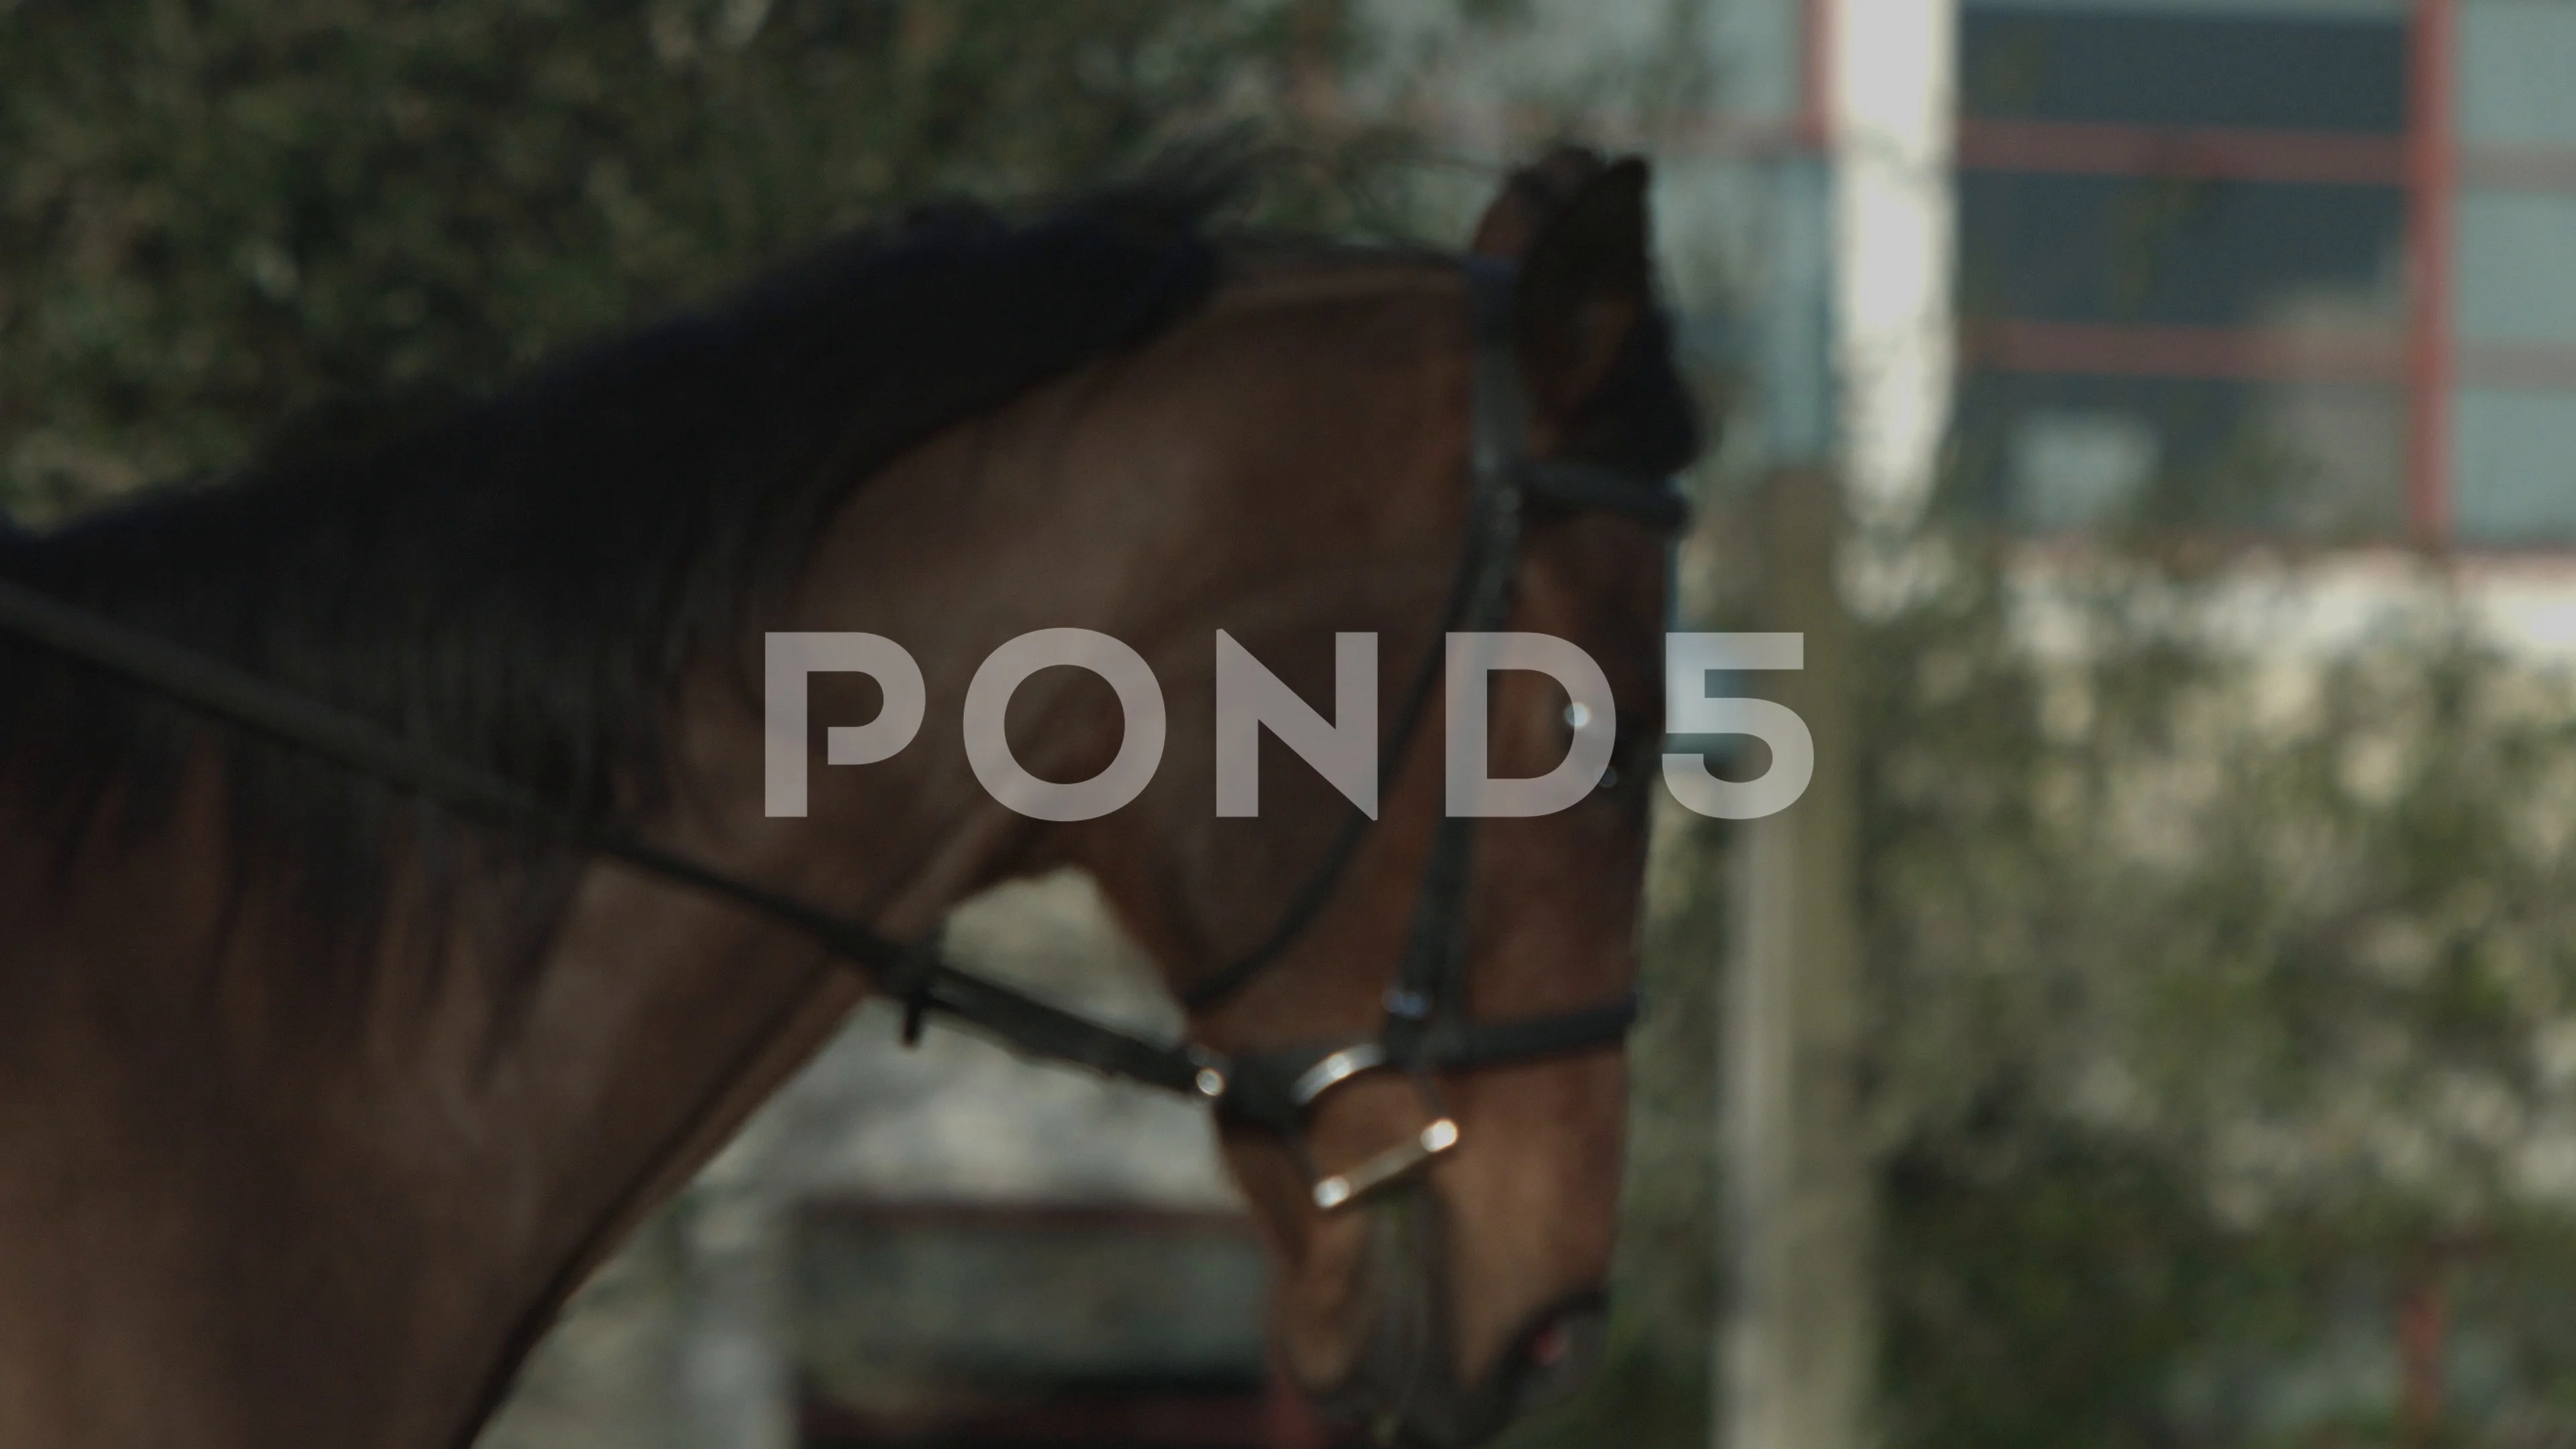 Cicciolina Stock Footage ~ Royalty Free Stock Videos | Pond5